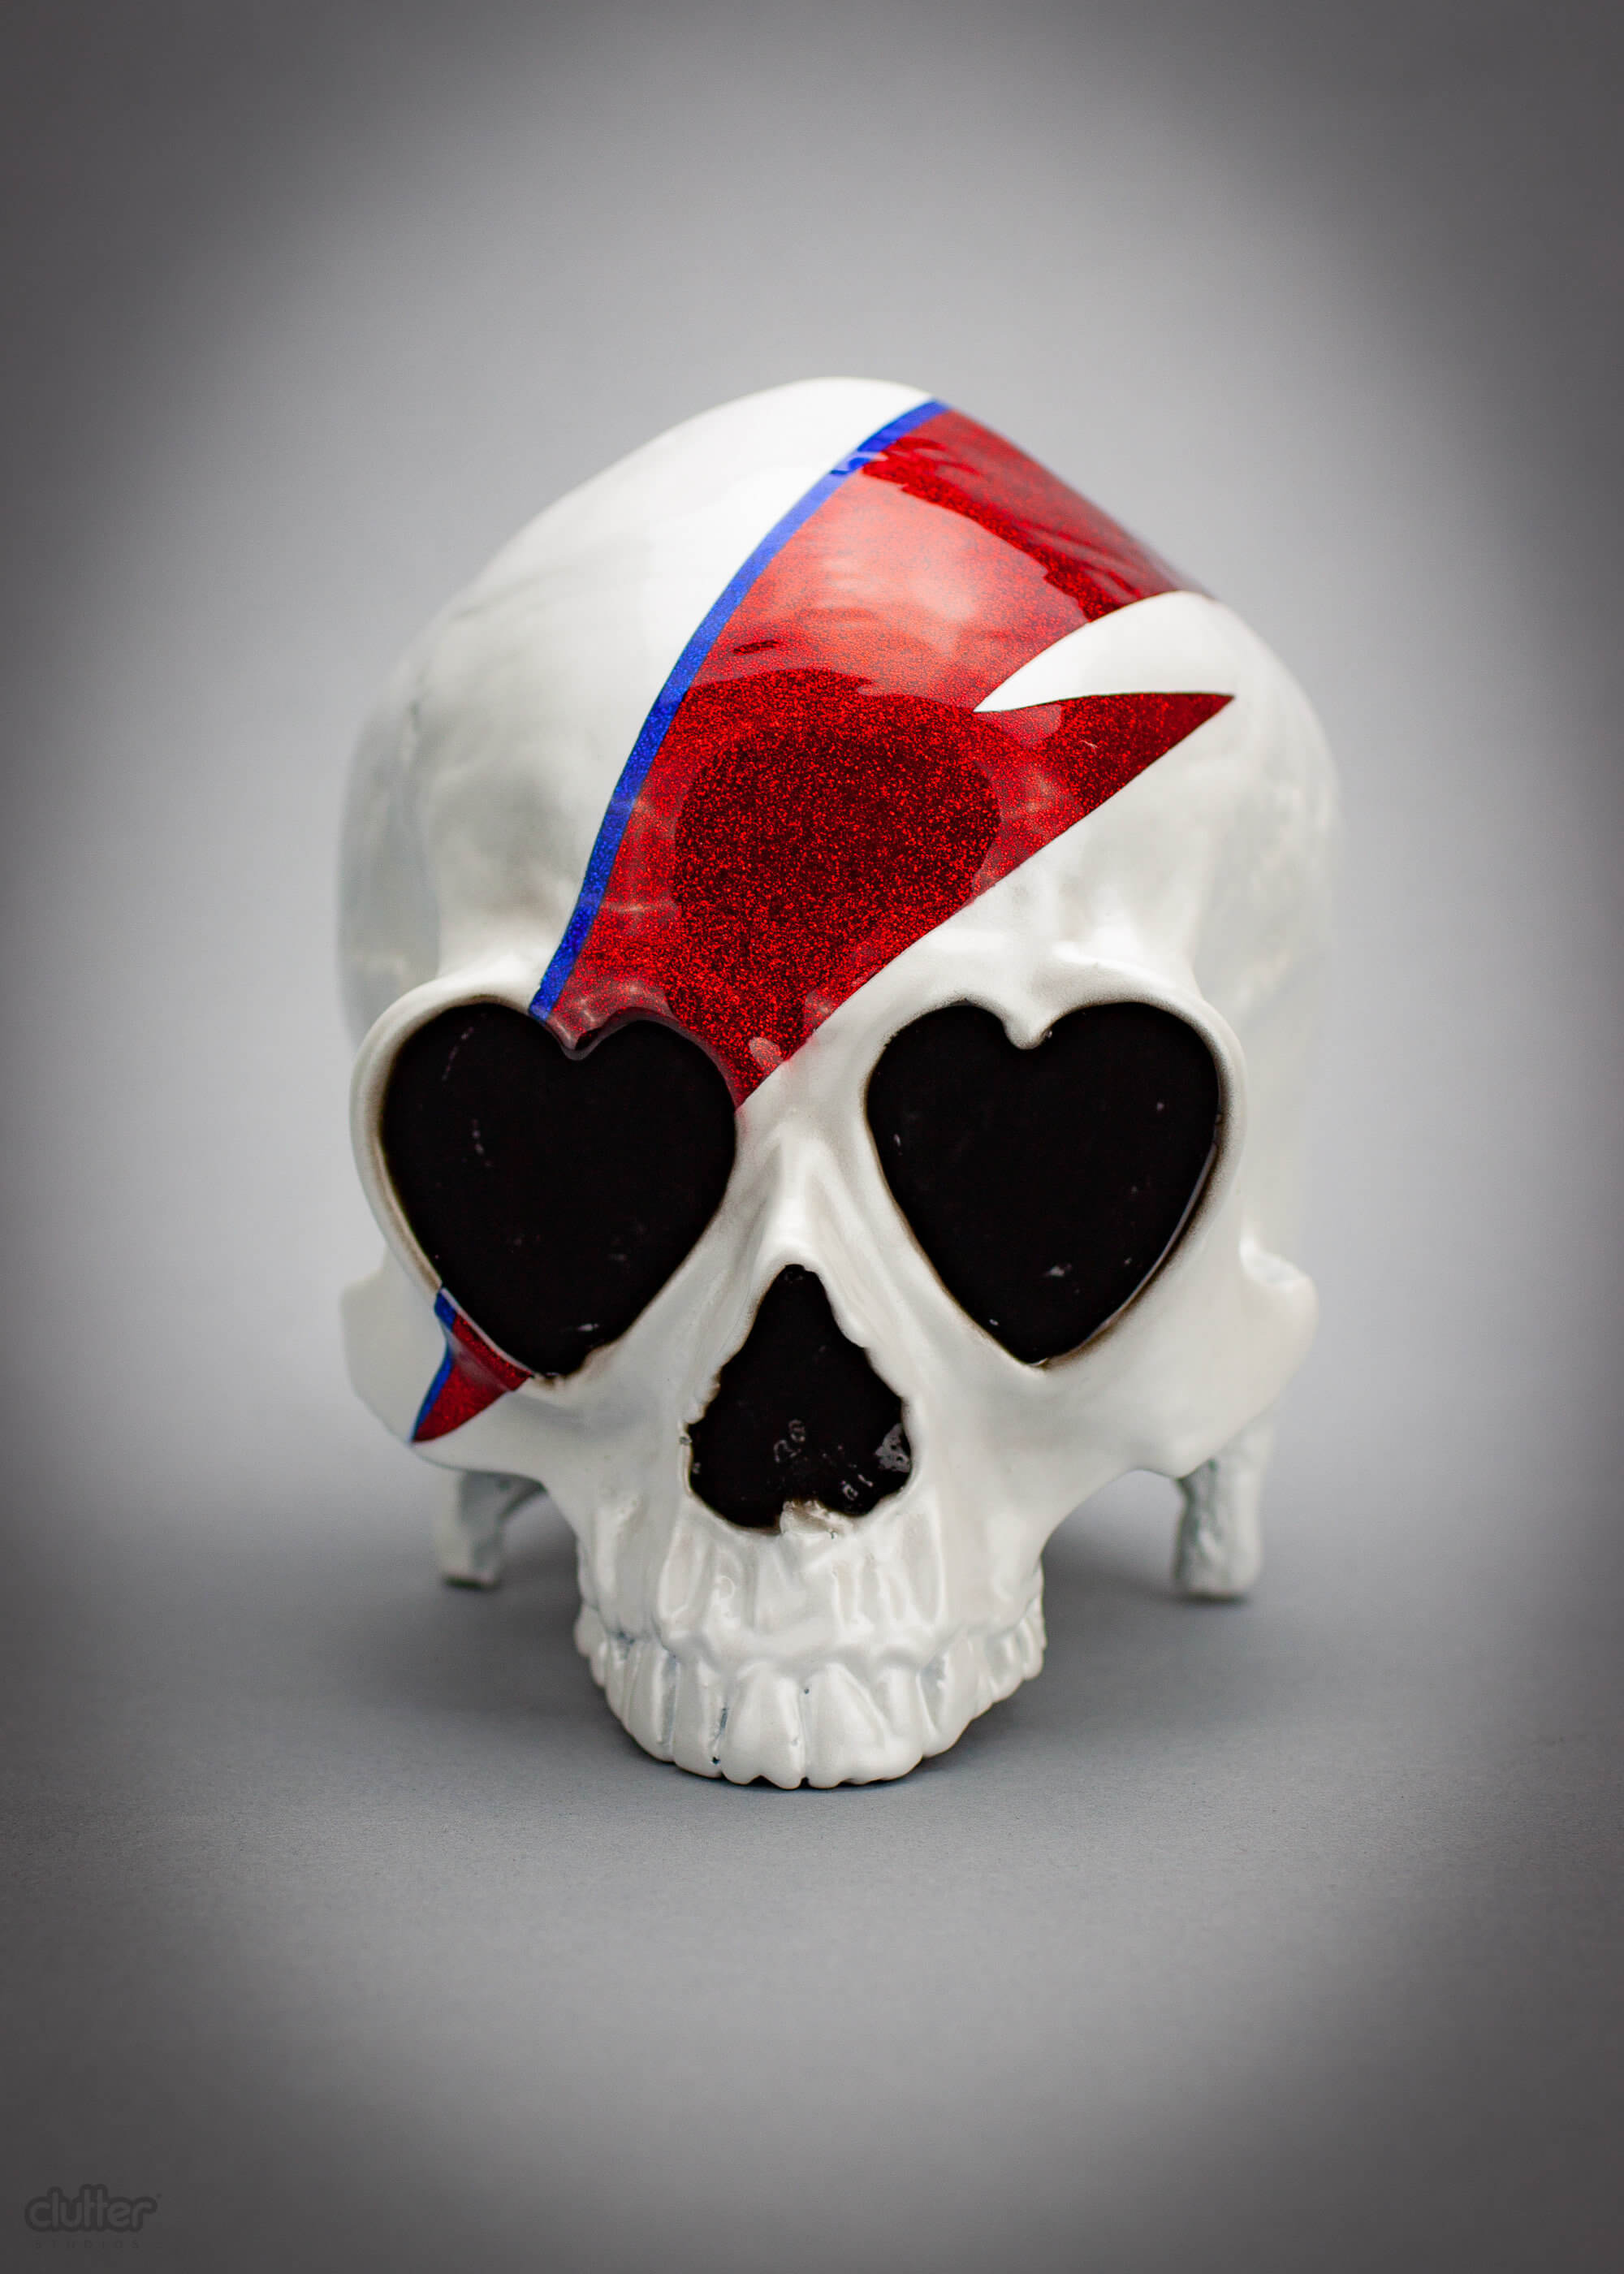 rebel-rebel-heart-skull-ron-english-clutter-3